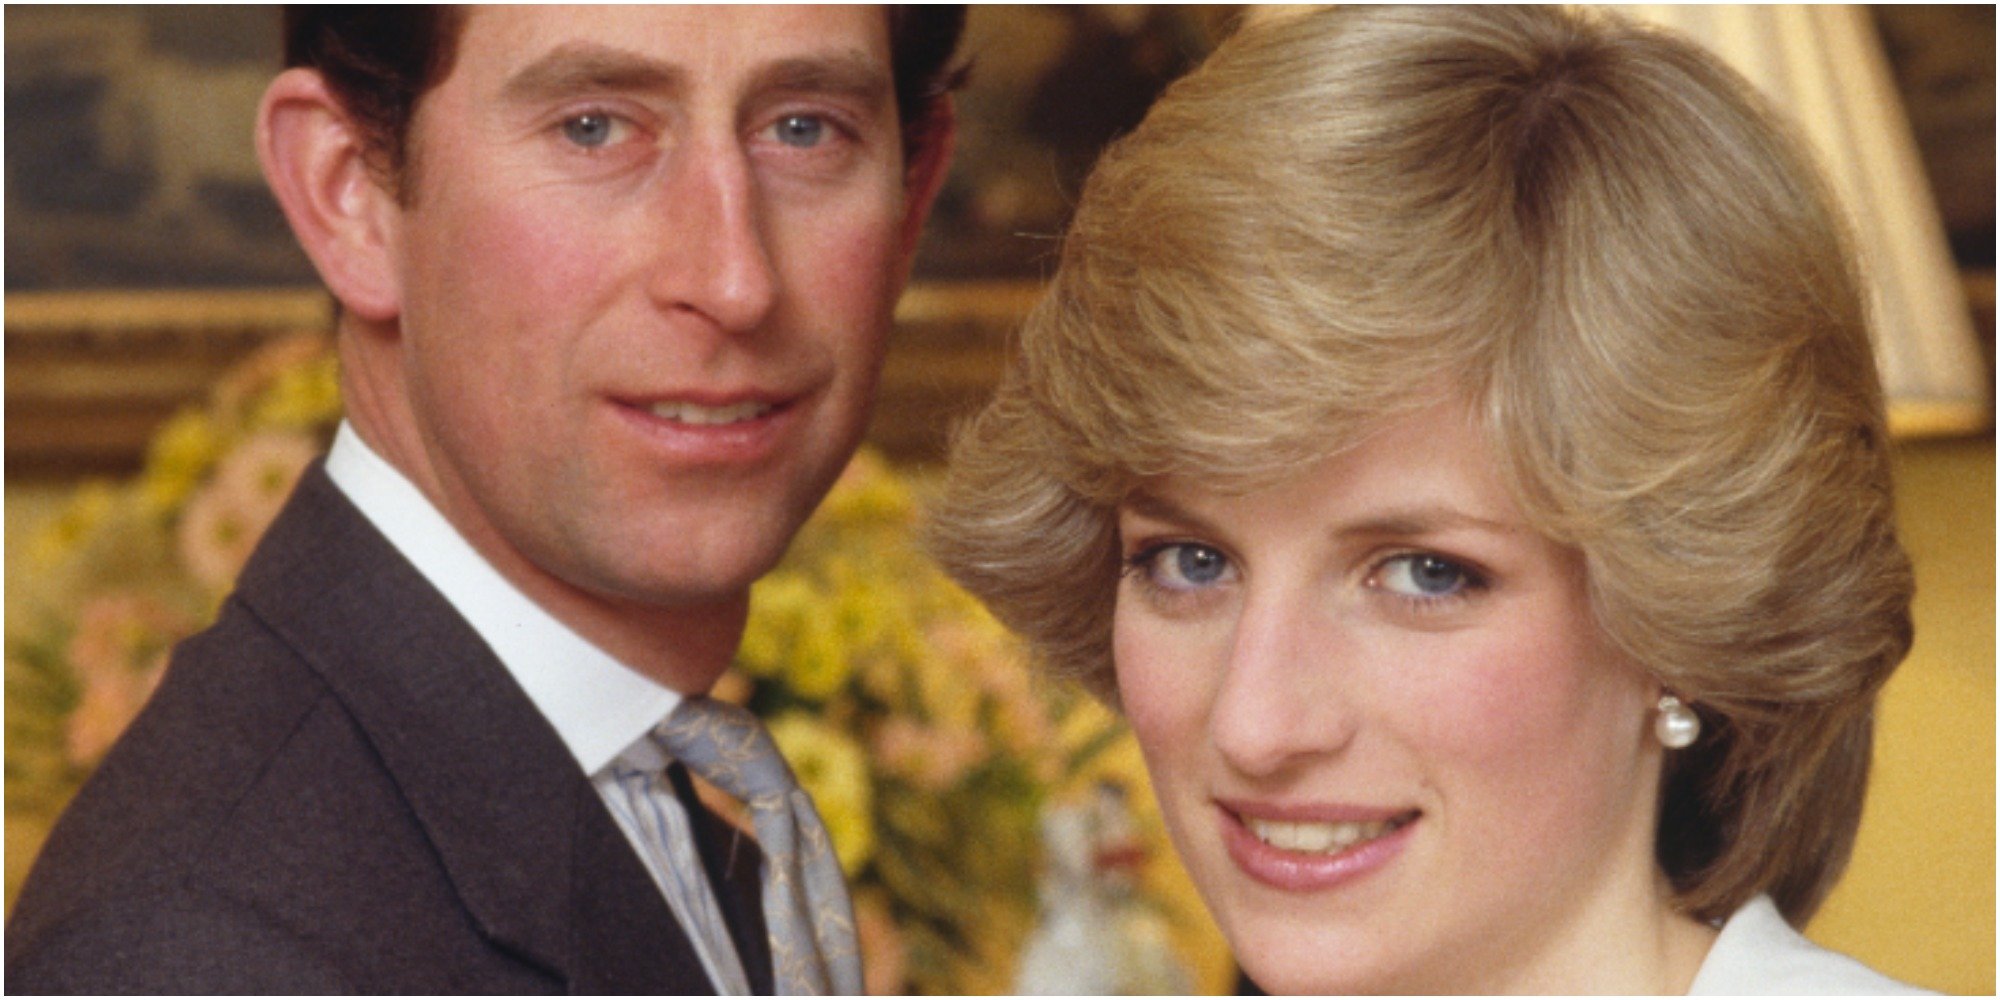 Prince Charles and Princess Diana pose for a photograph.